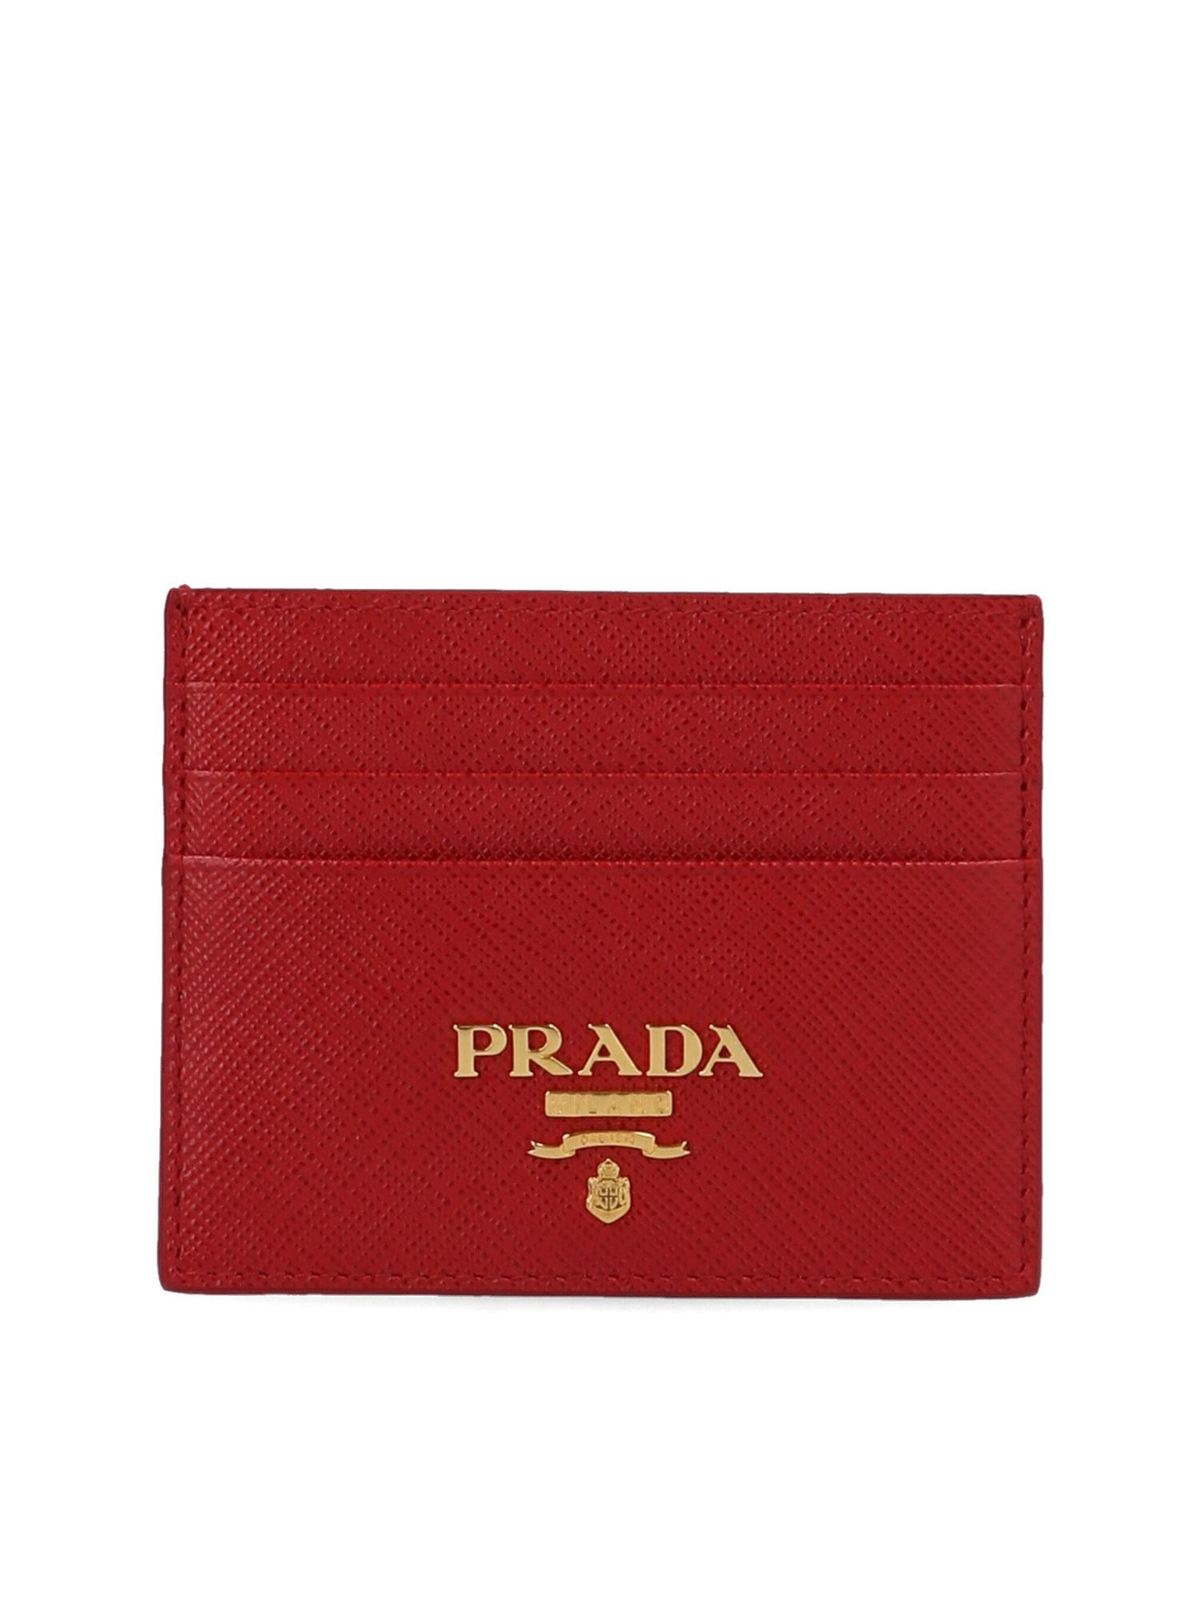 Prada - Saffiano card holder in red 